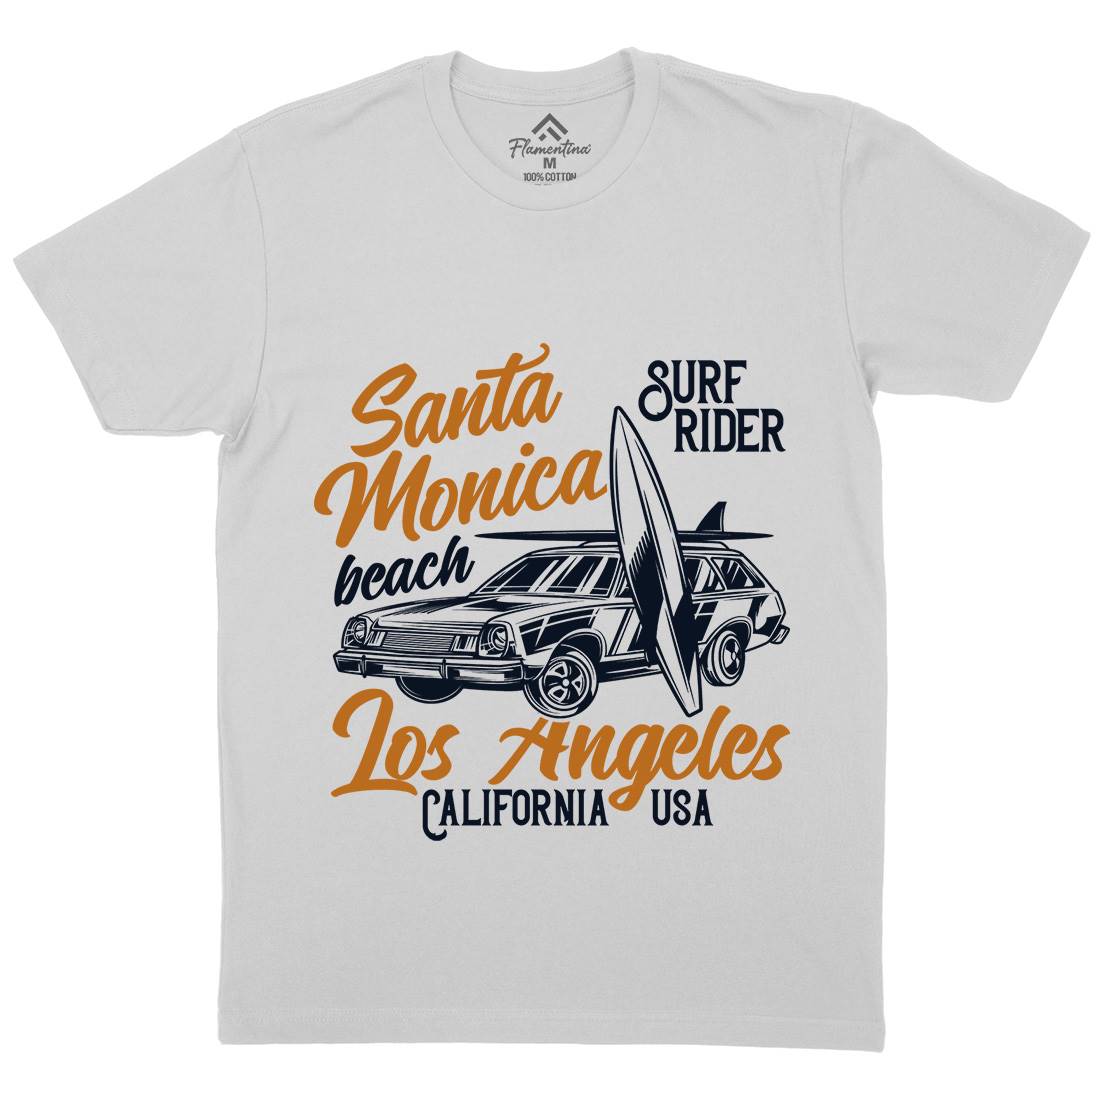 California Surfing Mens Crew Neck T-Shirt Surf B873